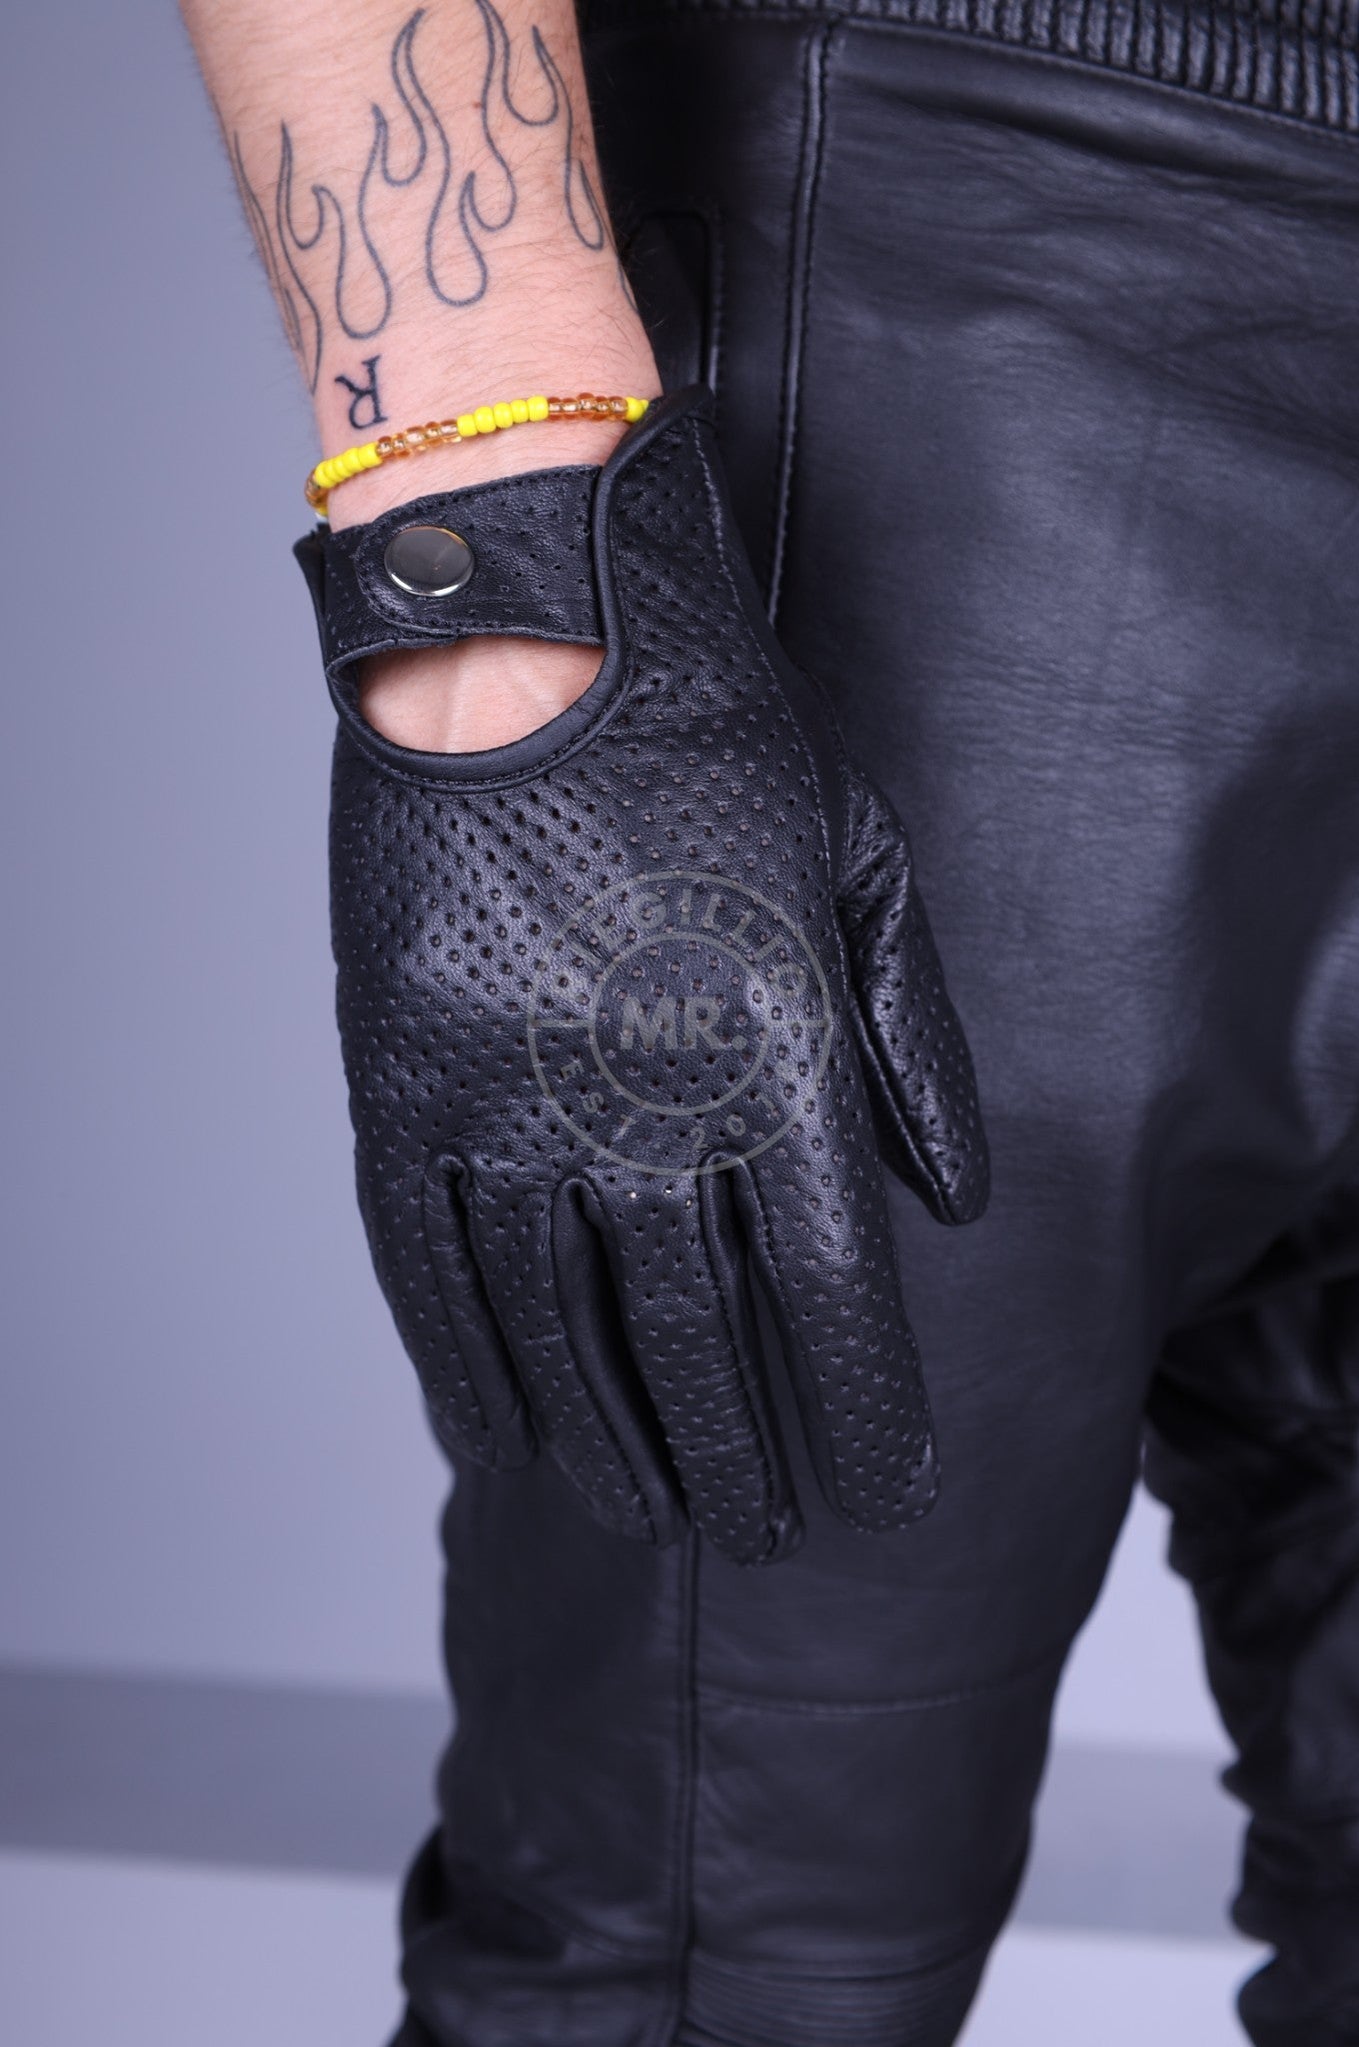 Leather Racing Glove Black-at MR. Riegillio